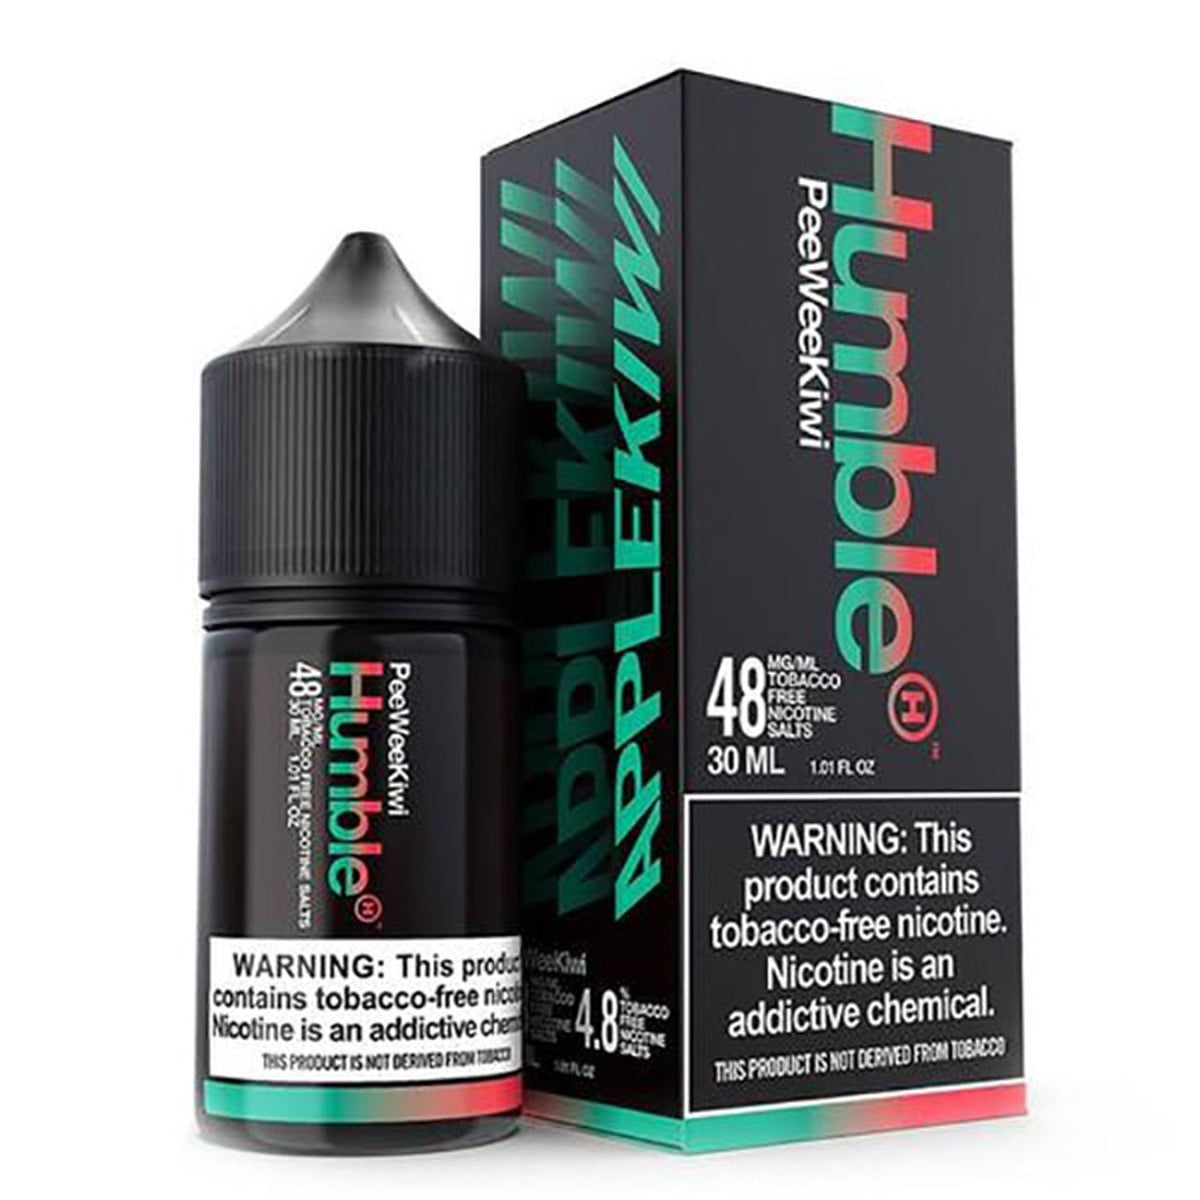 Pee Wee Kiwi By Humble Salts Tobacco-Free Nicotine Series 30mL with Packaging